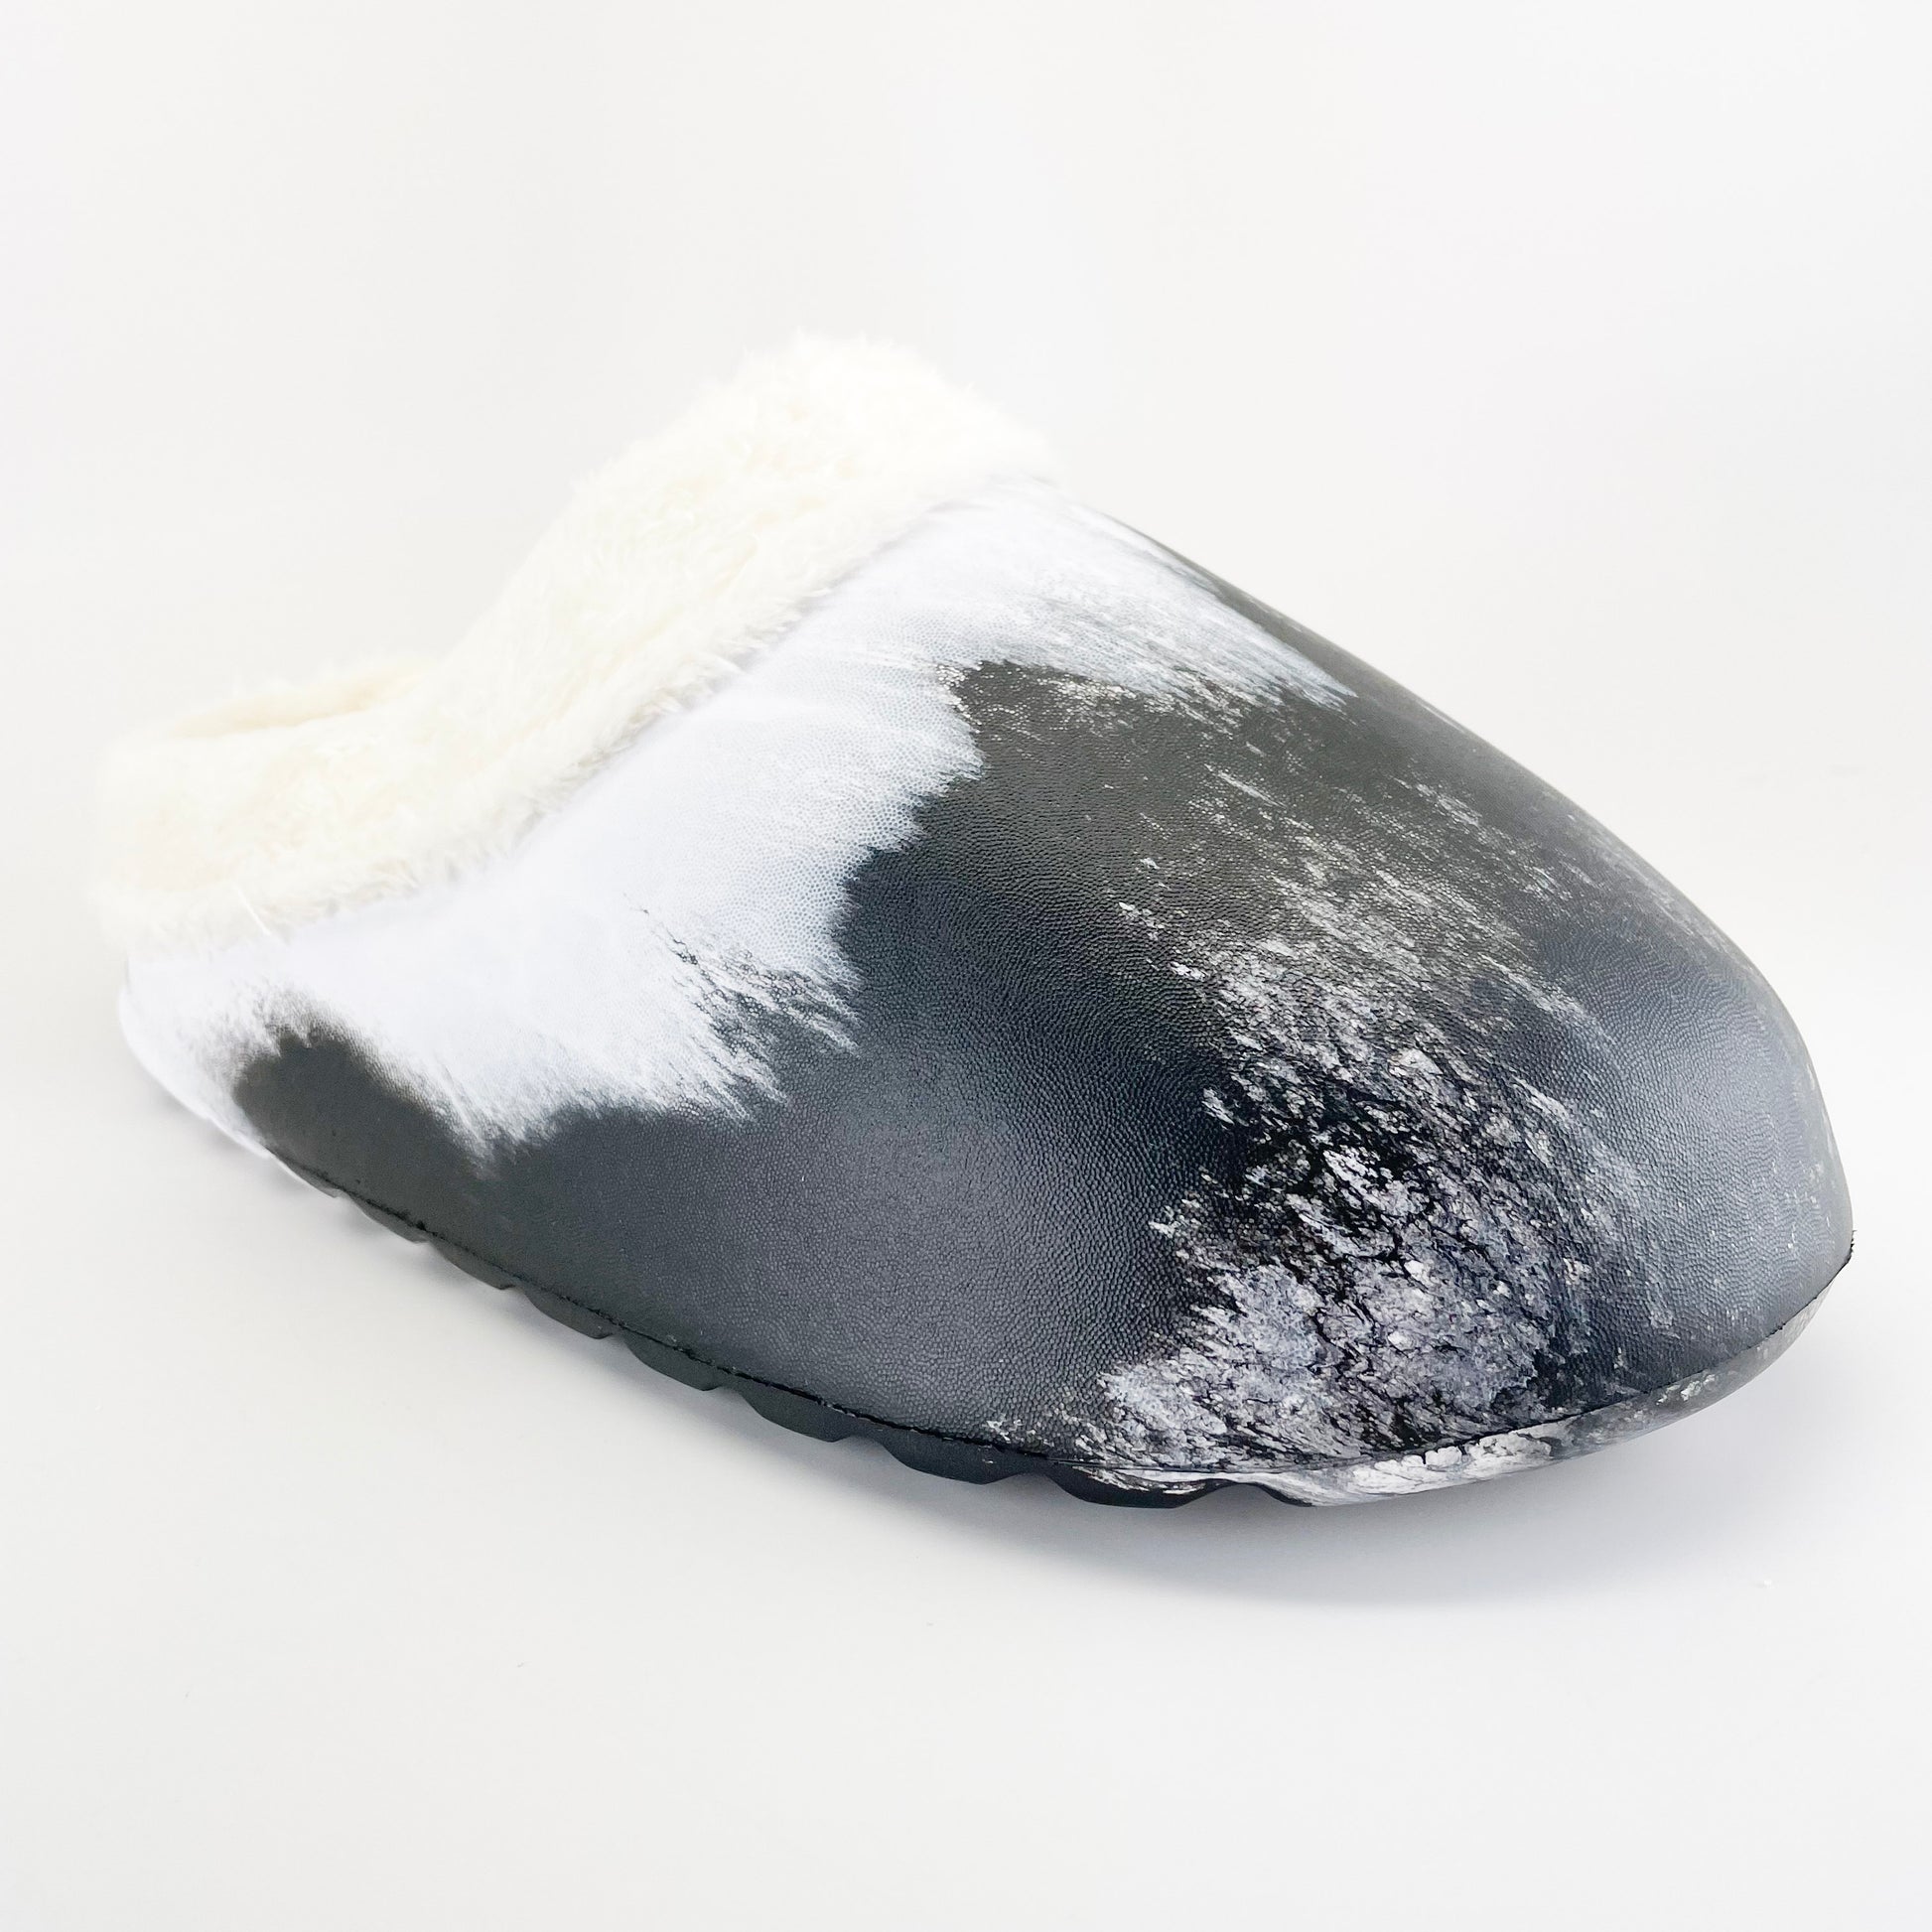 superjack 2235 black/white tie dye print faux fur lined clogs slippers